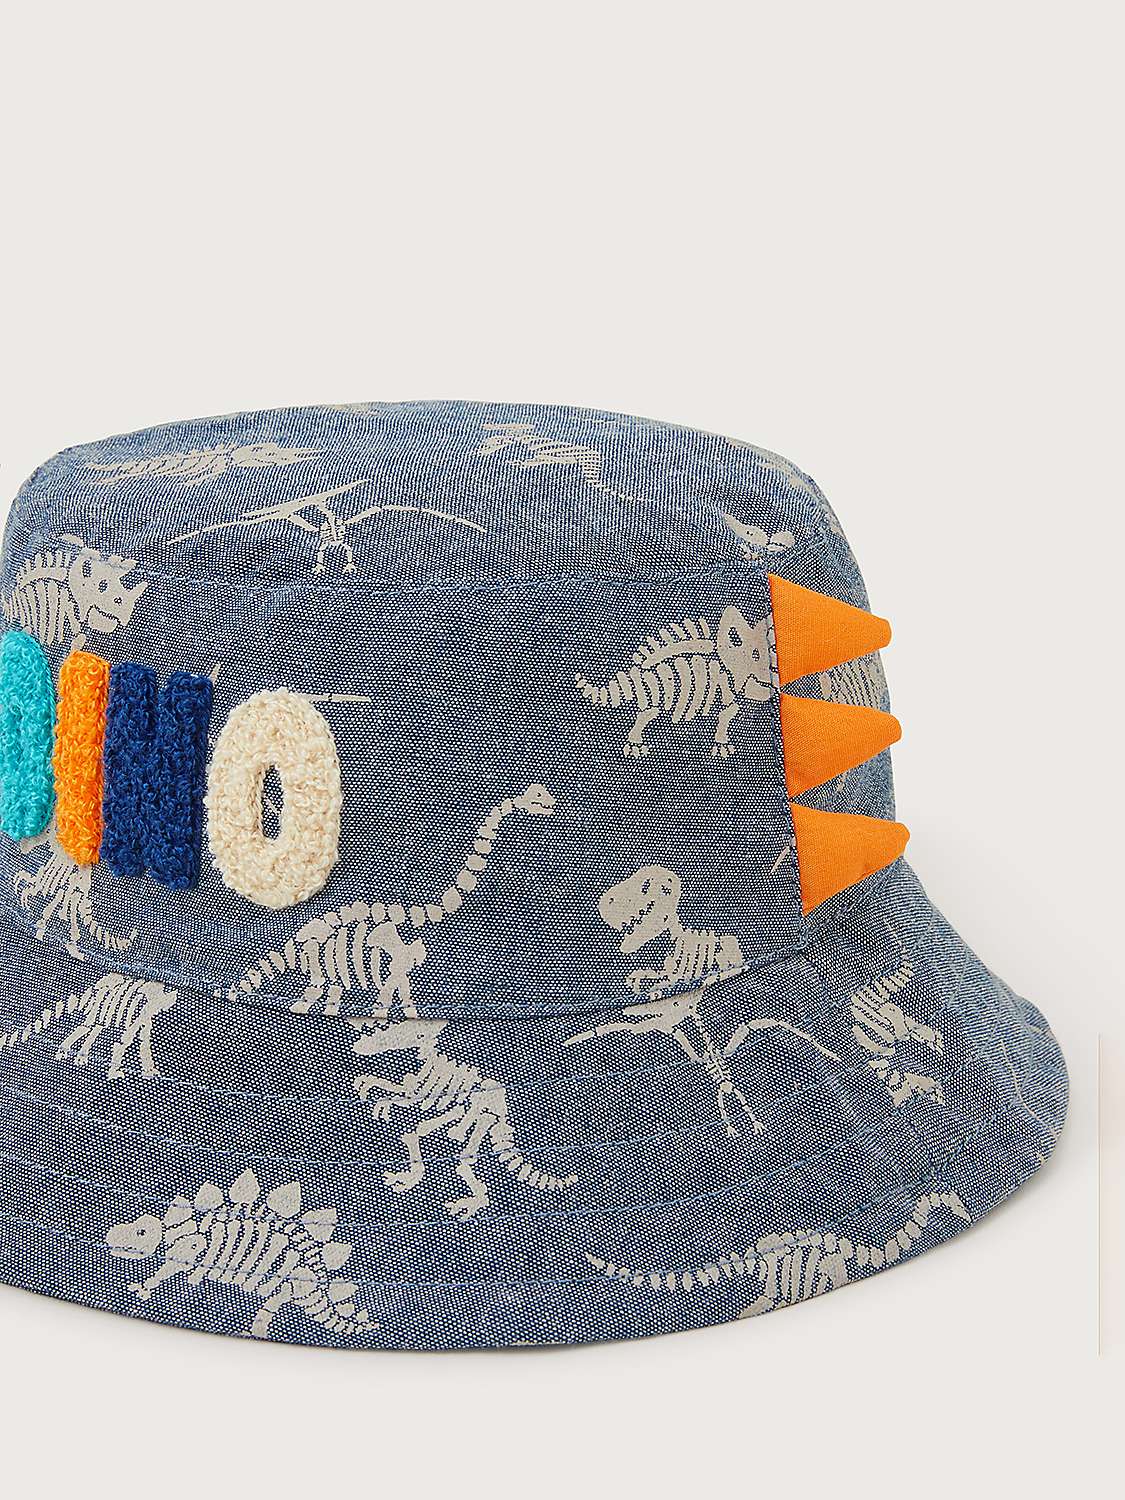 Buy Monsoon Kids' Dino Bucket Hat, Multi Online at johnlewis.com